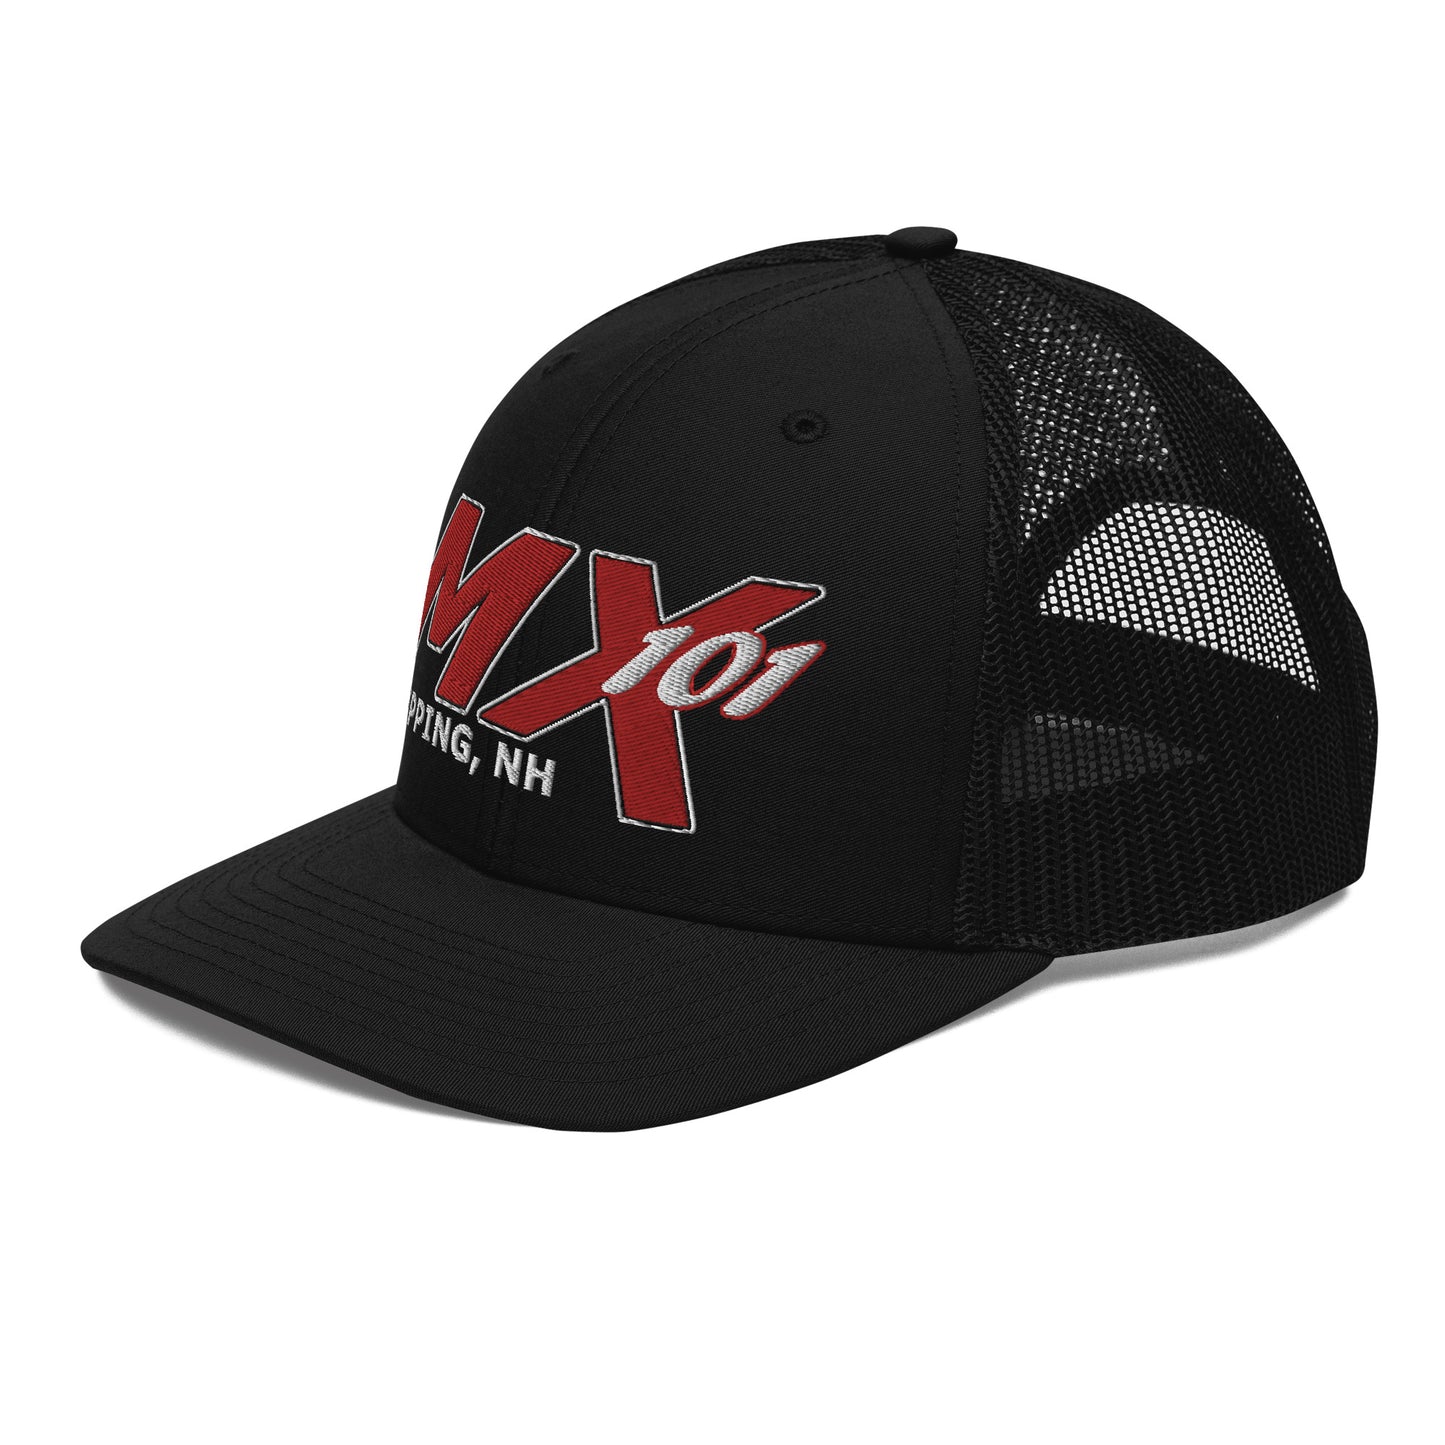 MX101 Richard 112 Snapback Hat